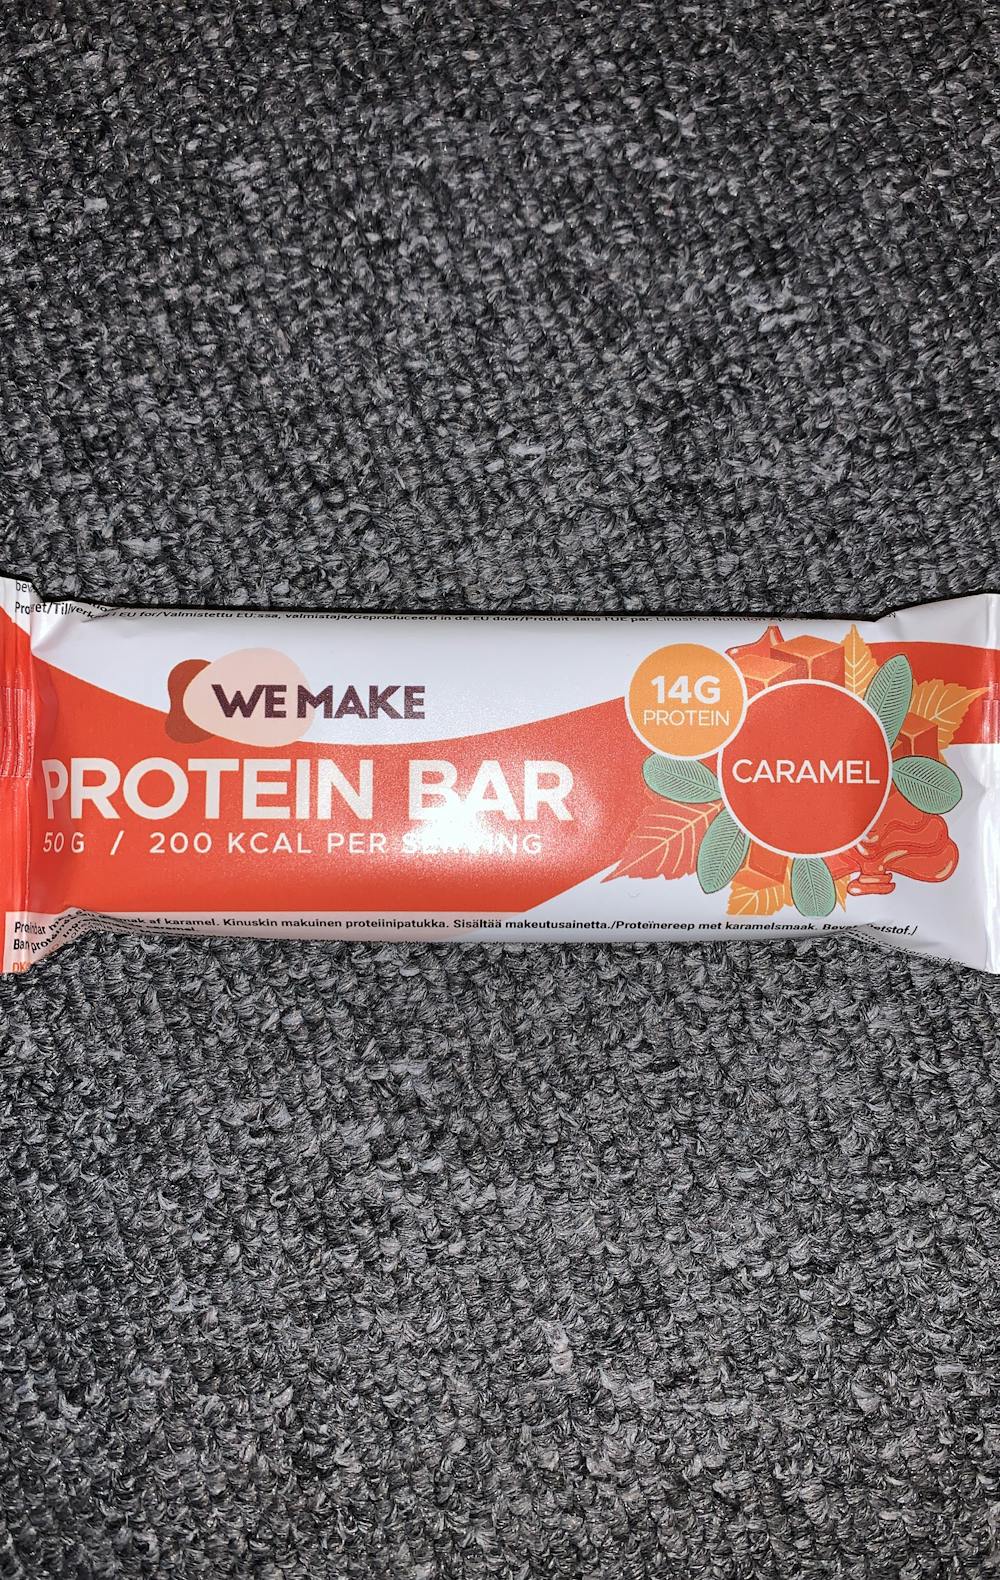 Protein bar caramel, We make